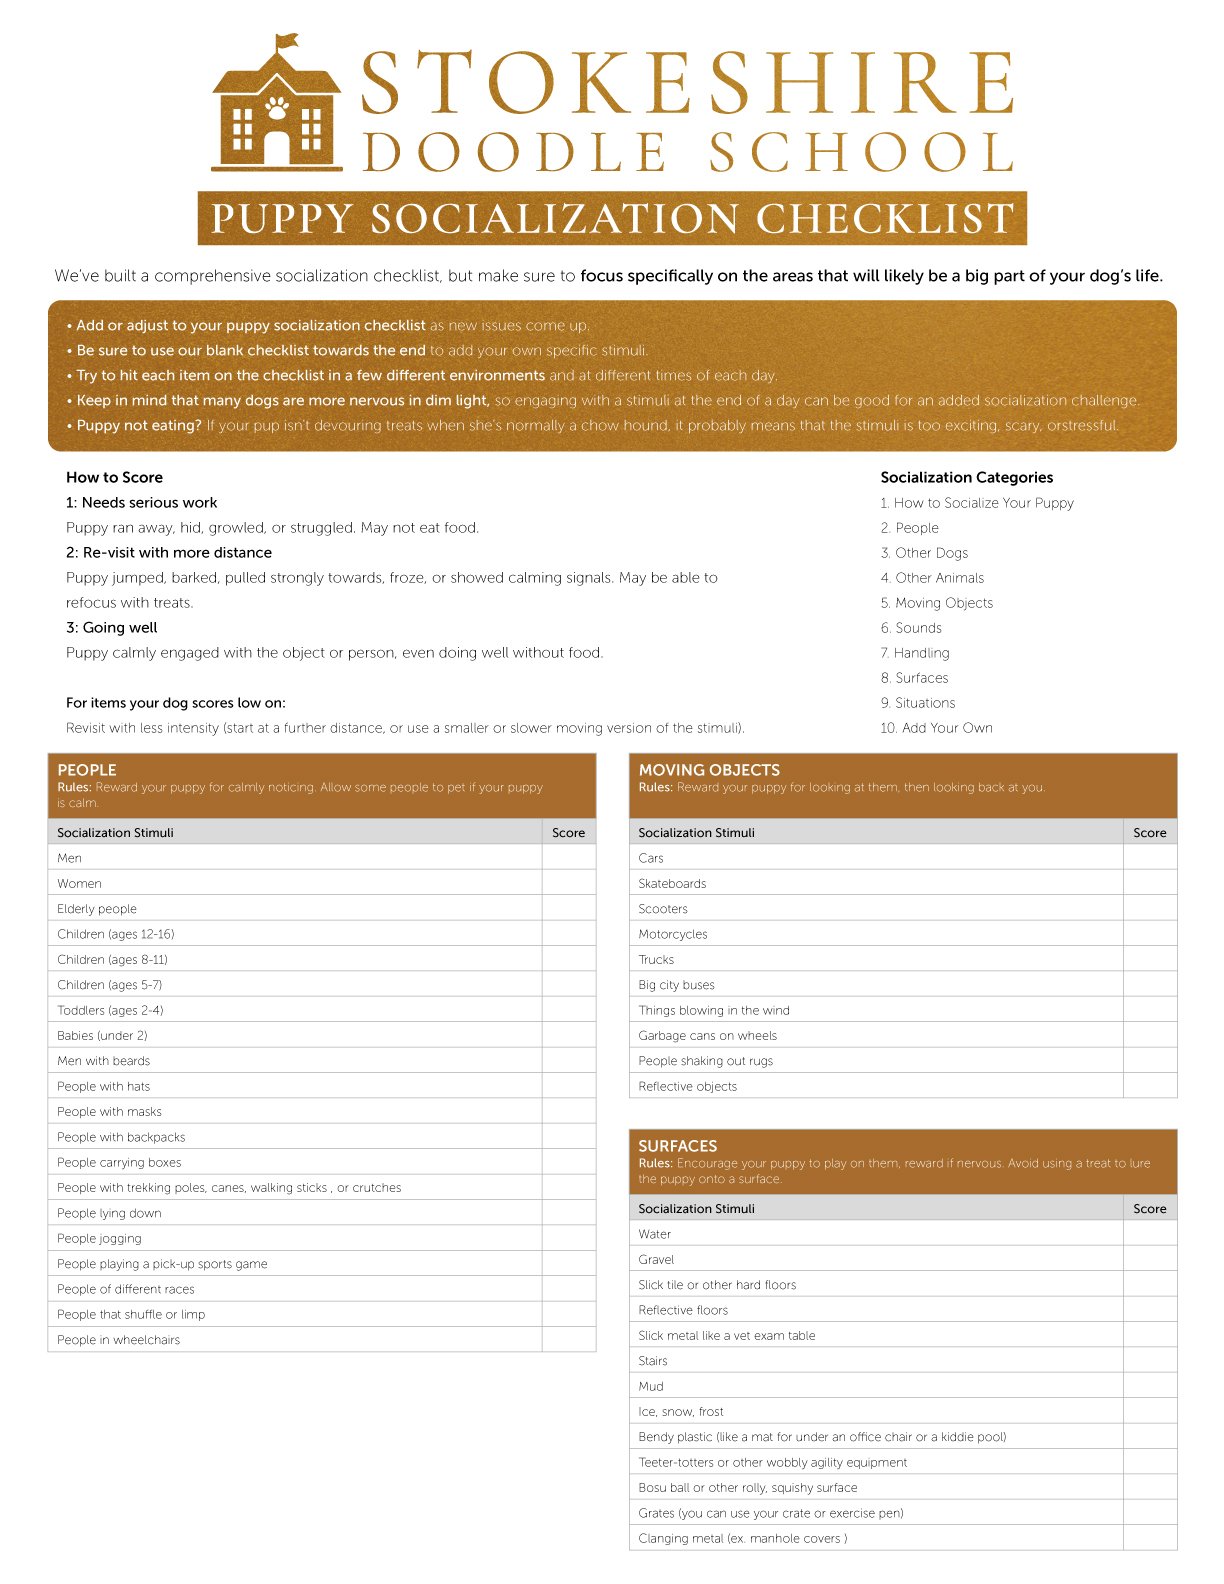 Stokeshire-Doodle-School-Puppy-Socialization-Checklist-8.5x11-PAGE-1.jpg